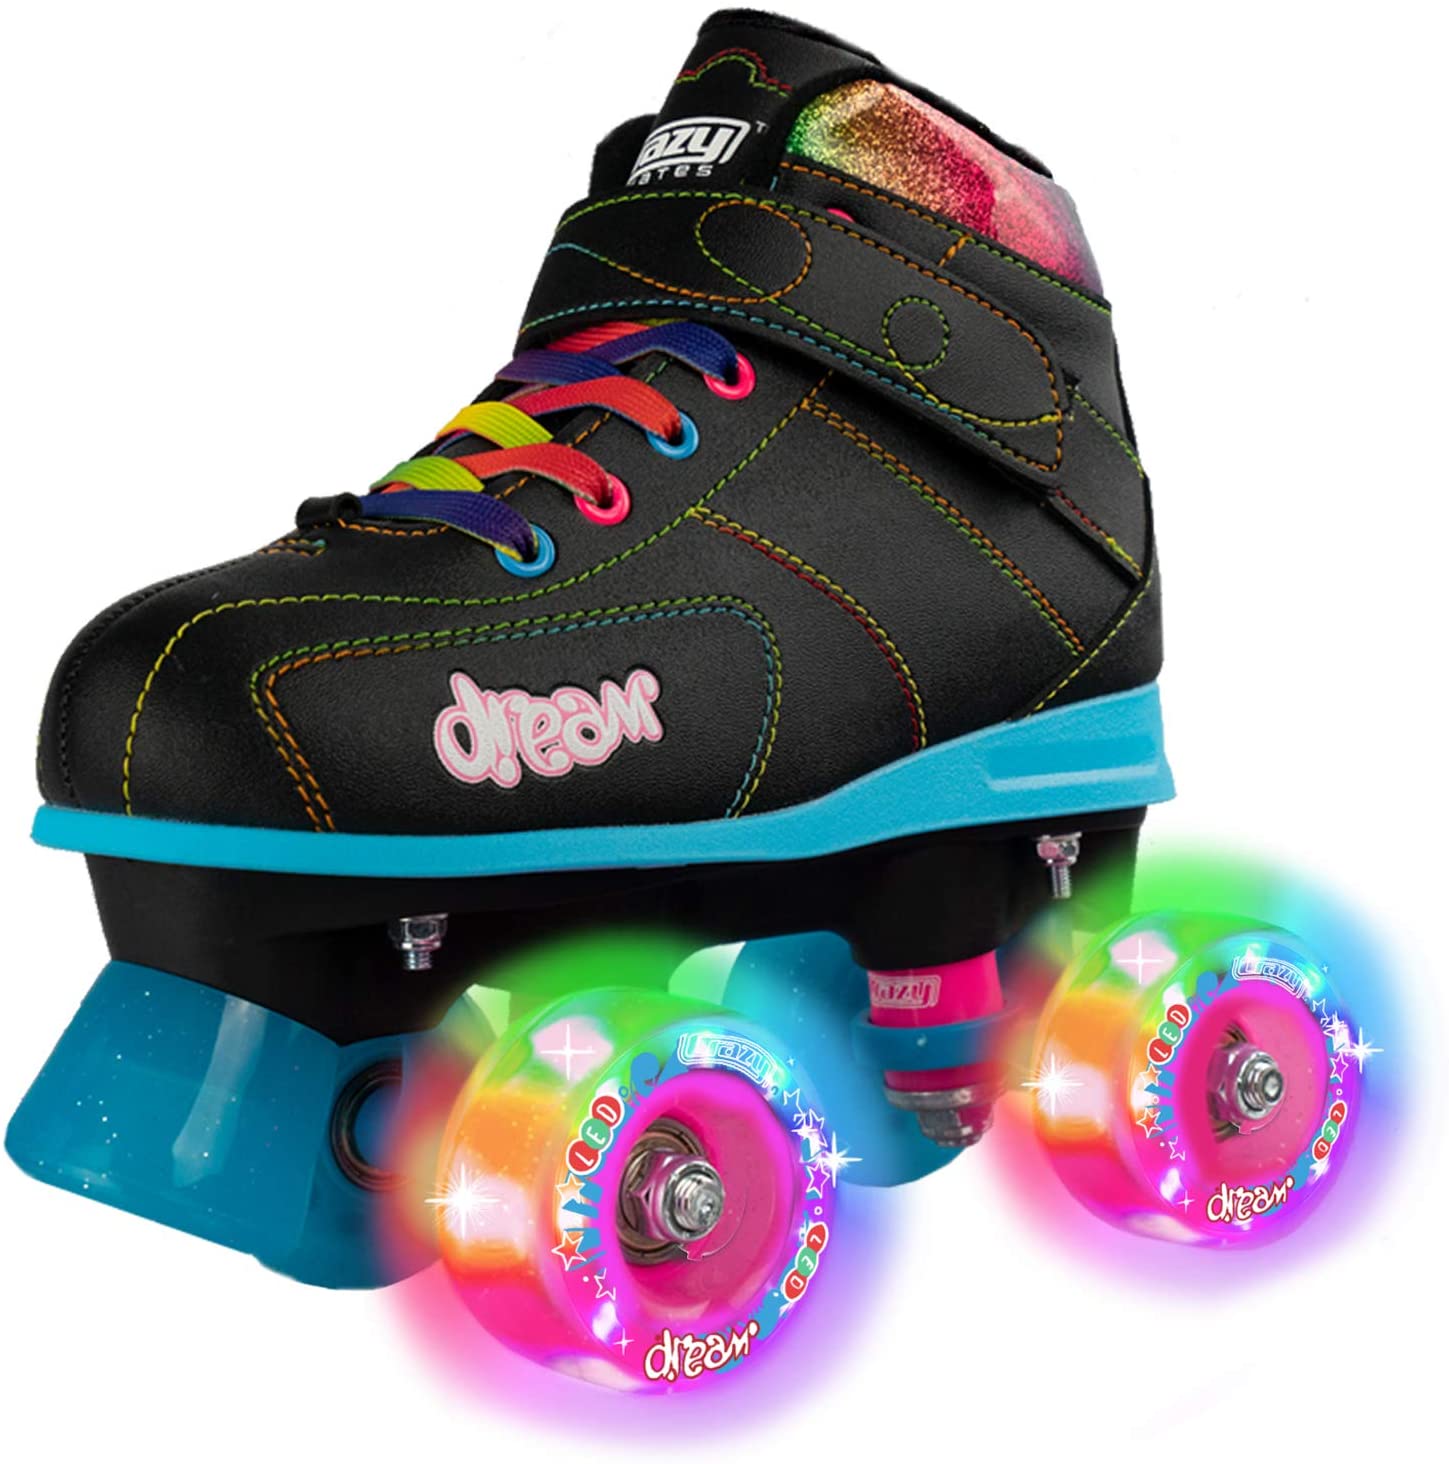 Crazy Skates Dream Roller Skates for Girls with LED Light-up Wheels- USED VER...